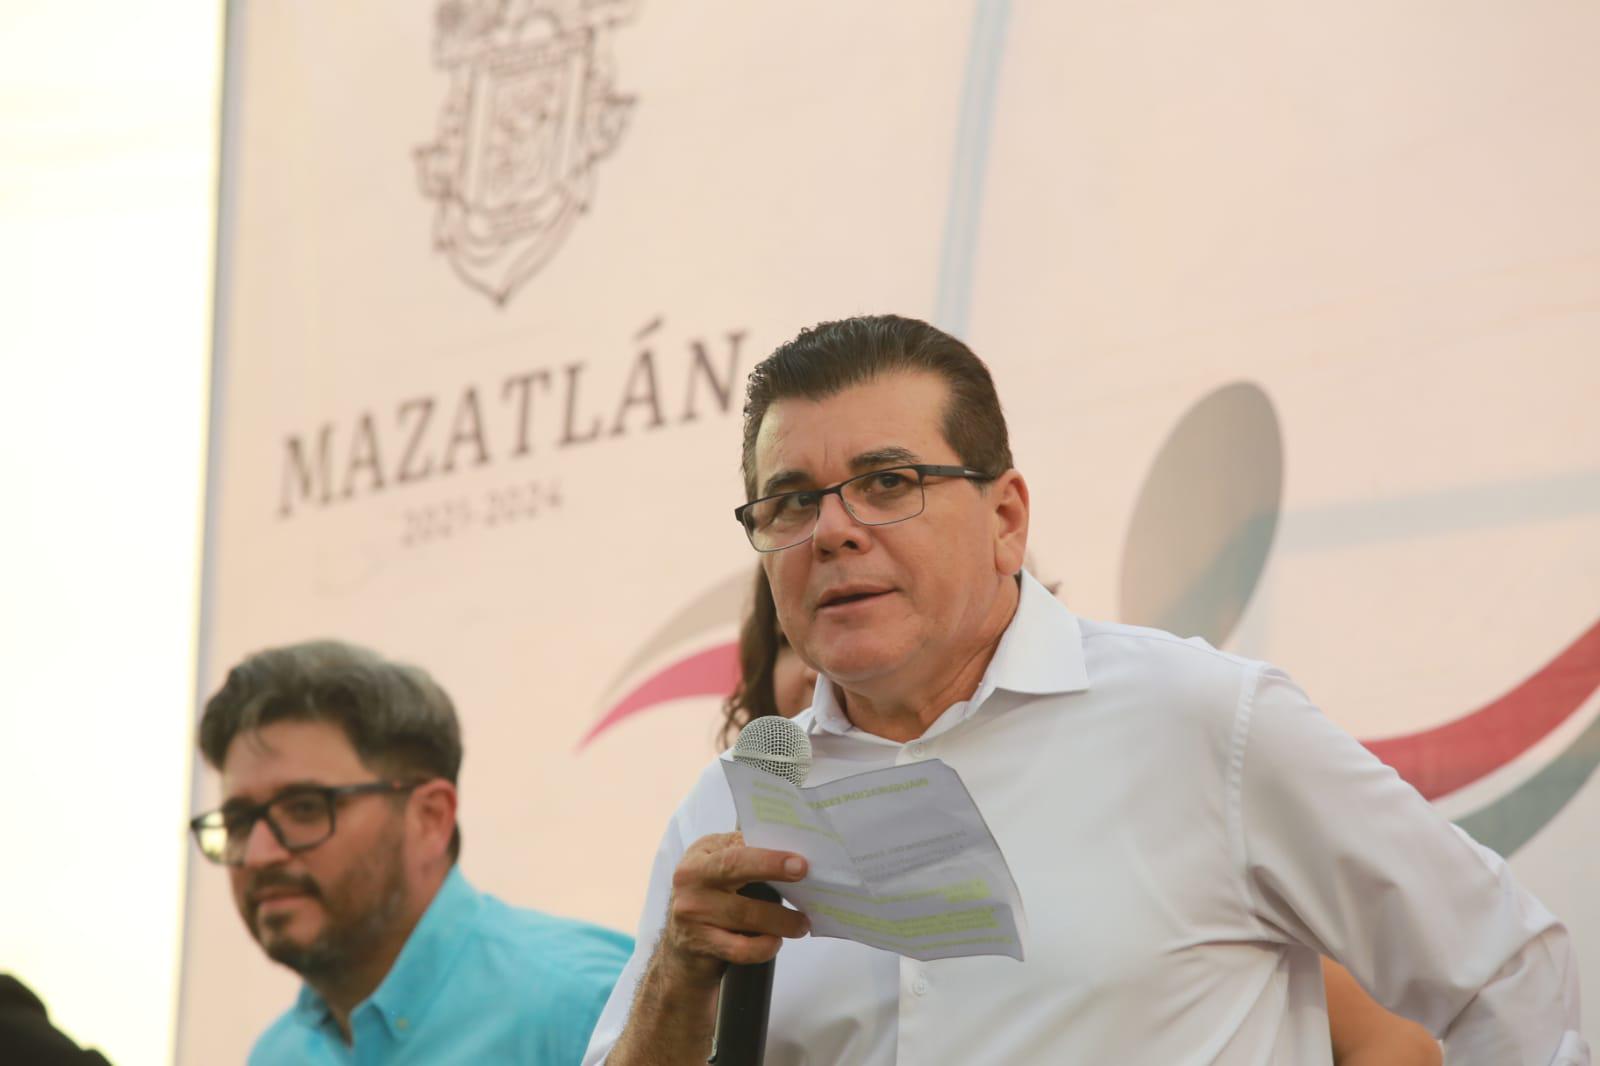 $!Oficializan apertura de Estatal de futbol, en Mazatlán